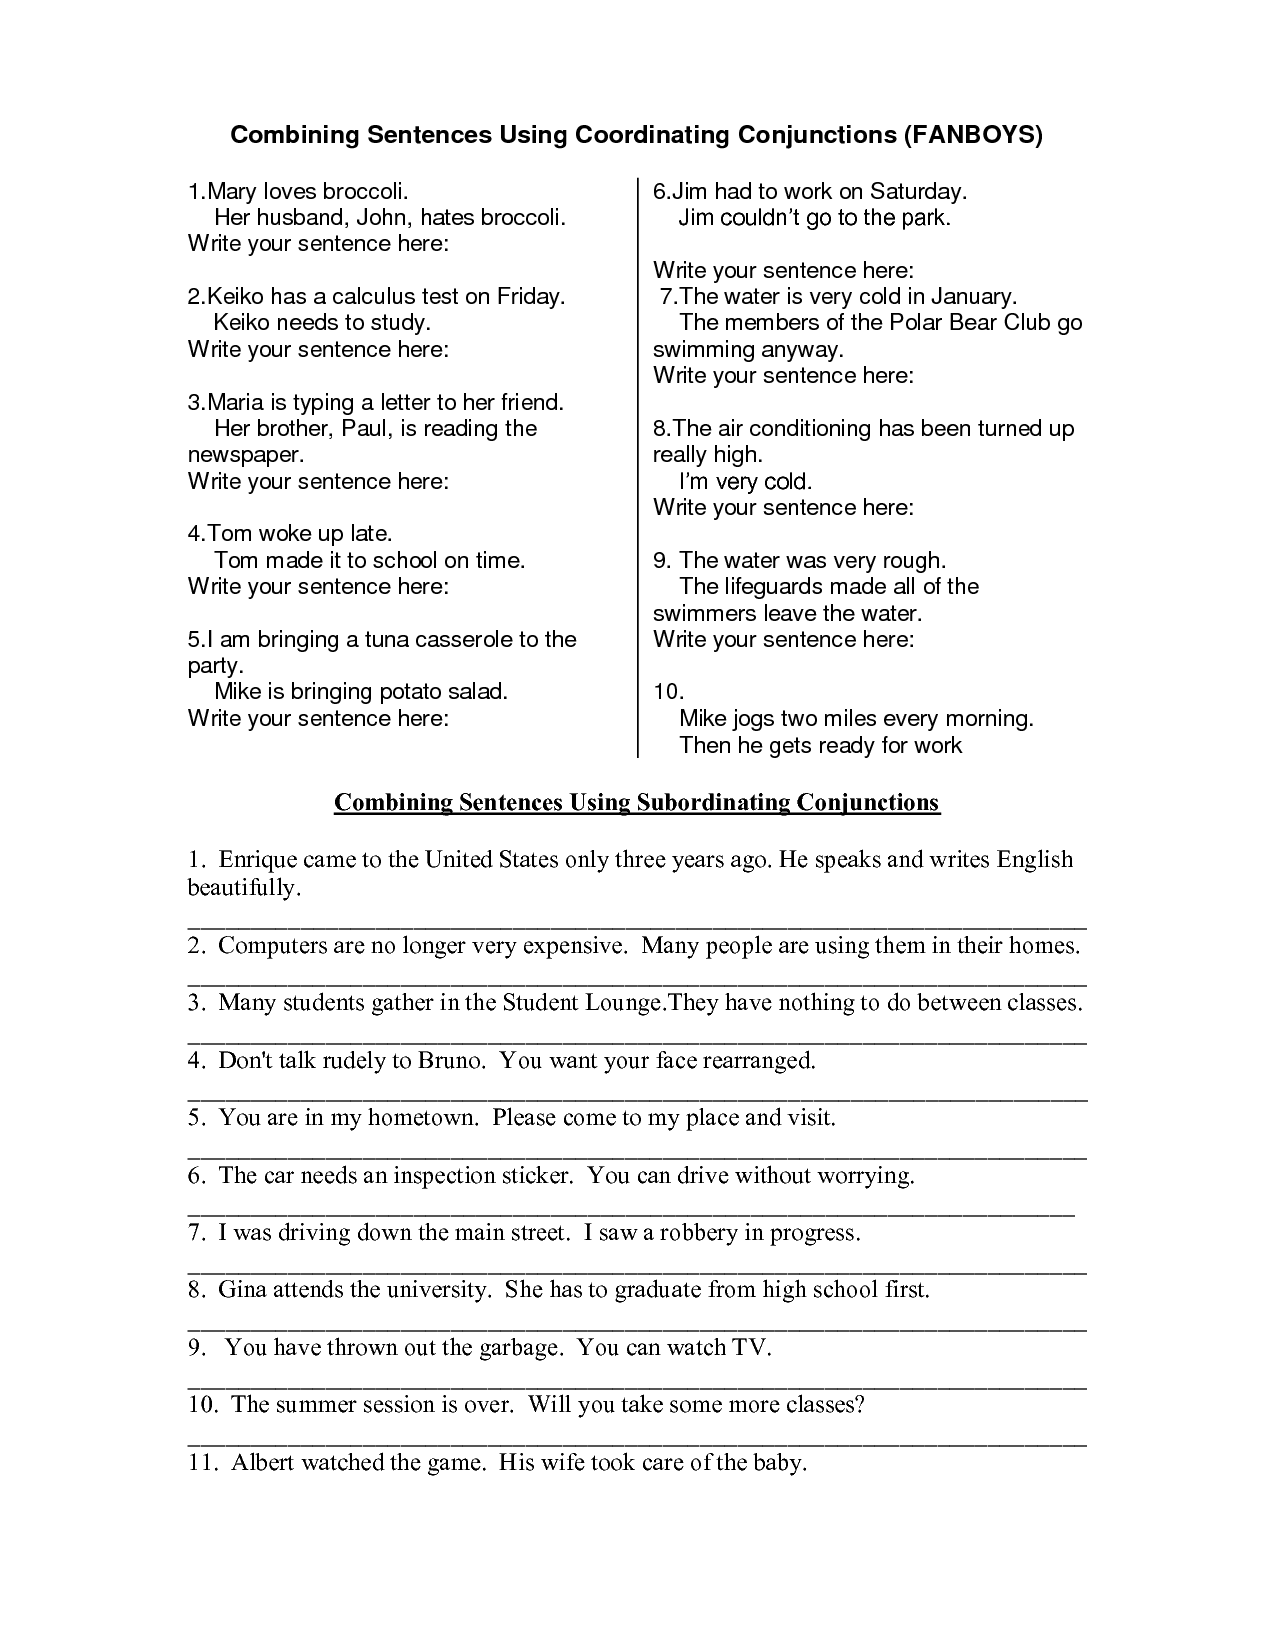 conjunctions-worksheets-coordinating-conjunctions-re-writing-worksheet